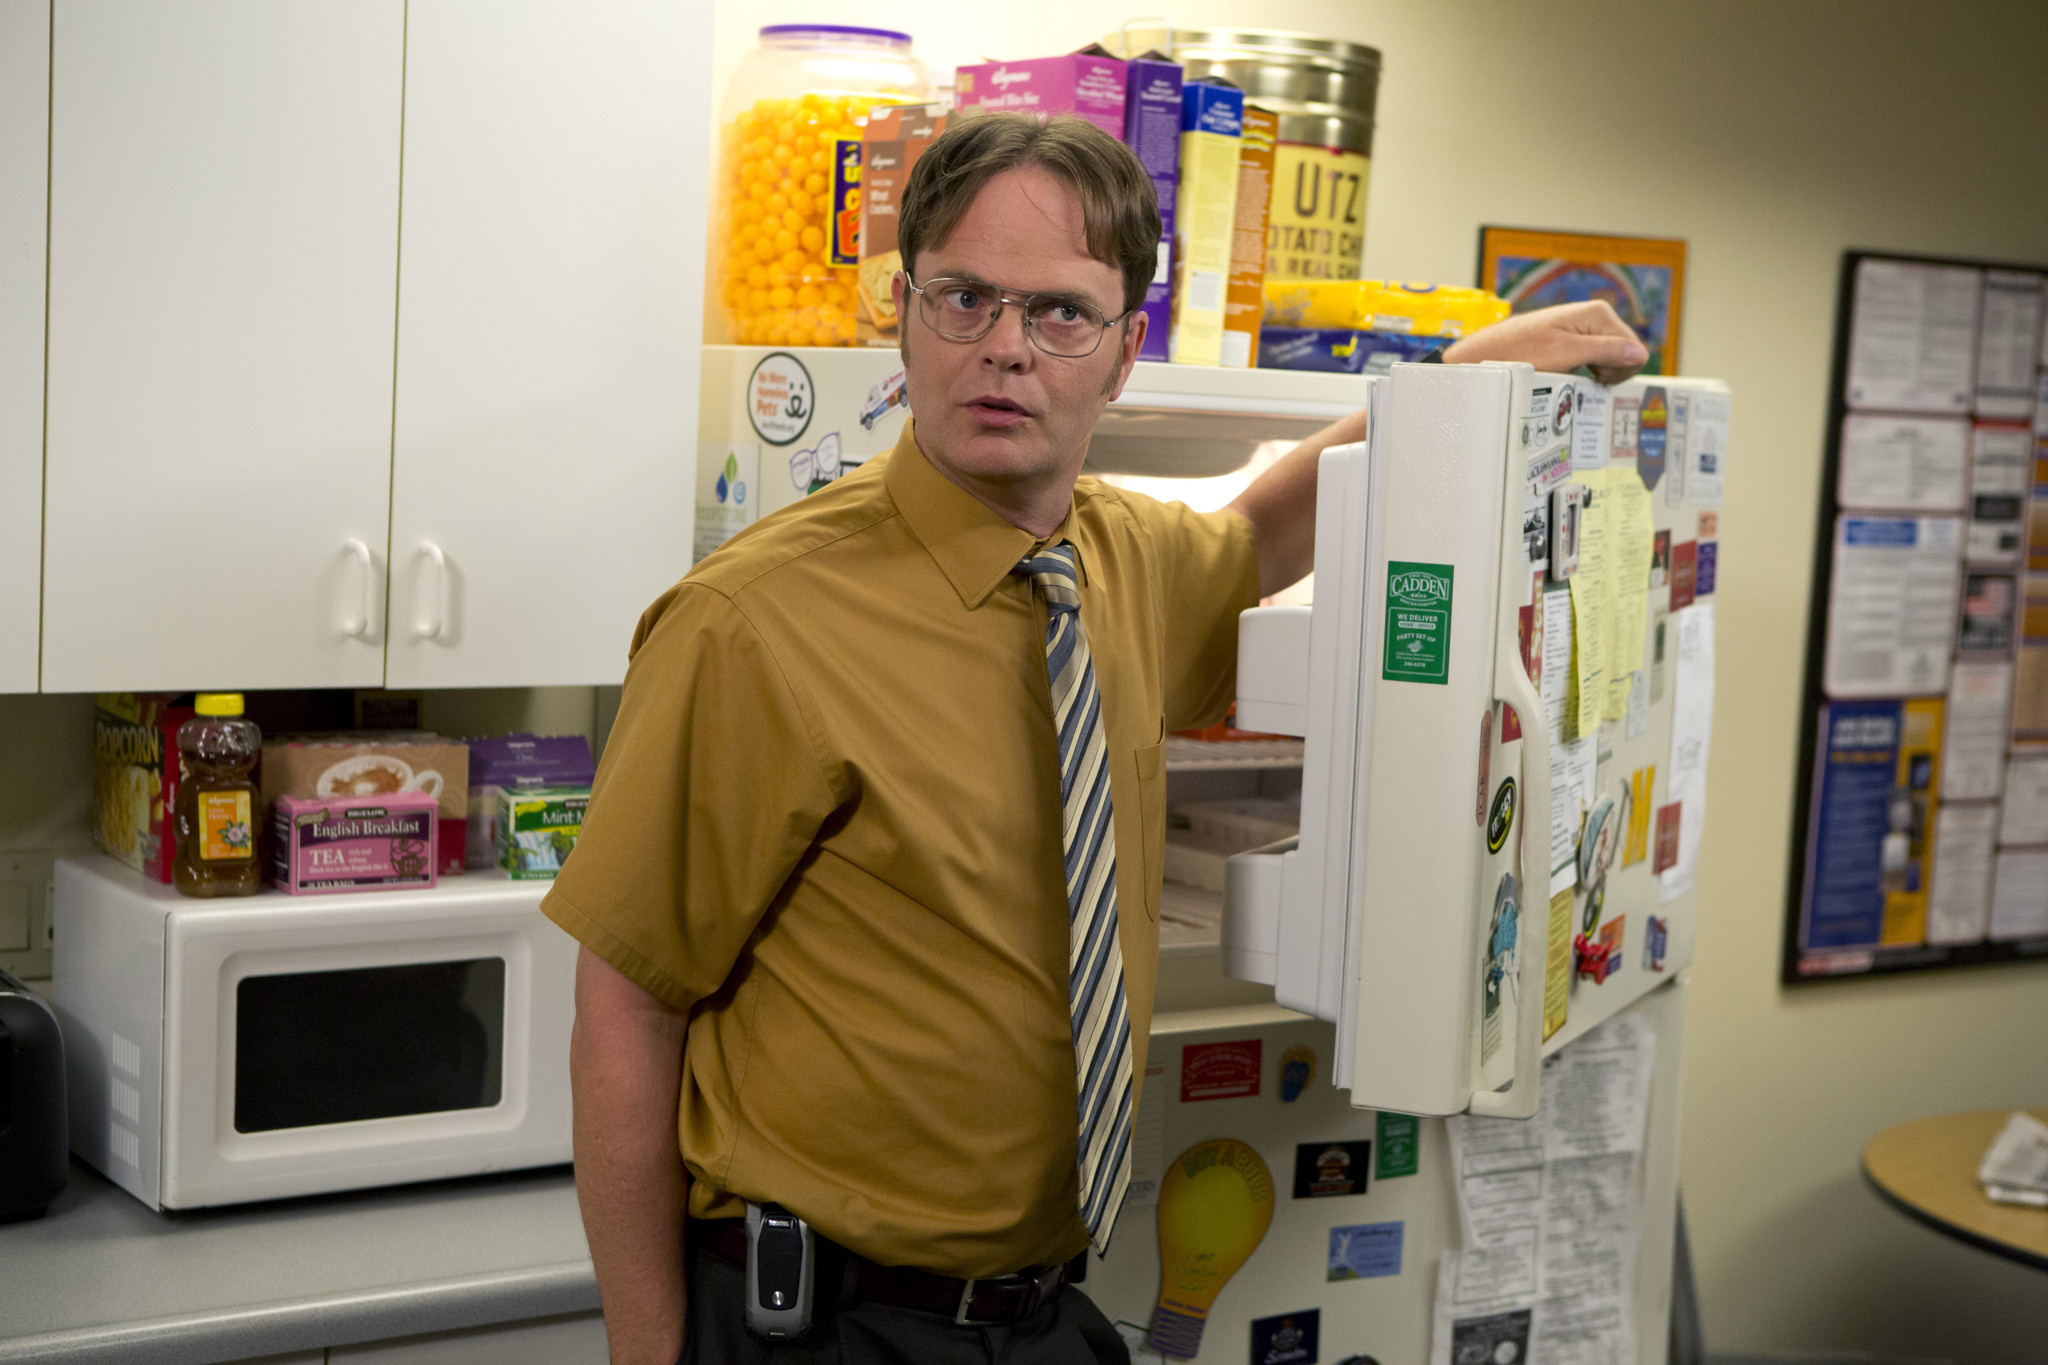 The Office - Season 9, Geek Gallery